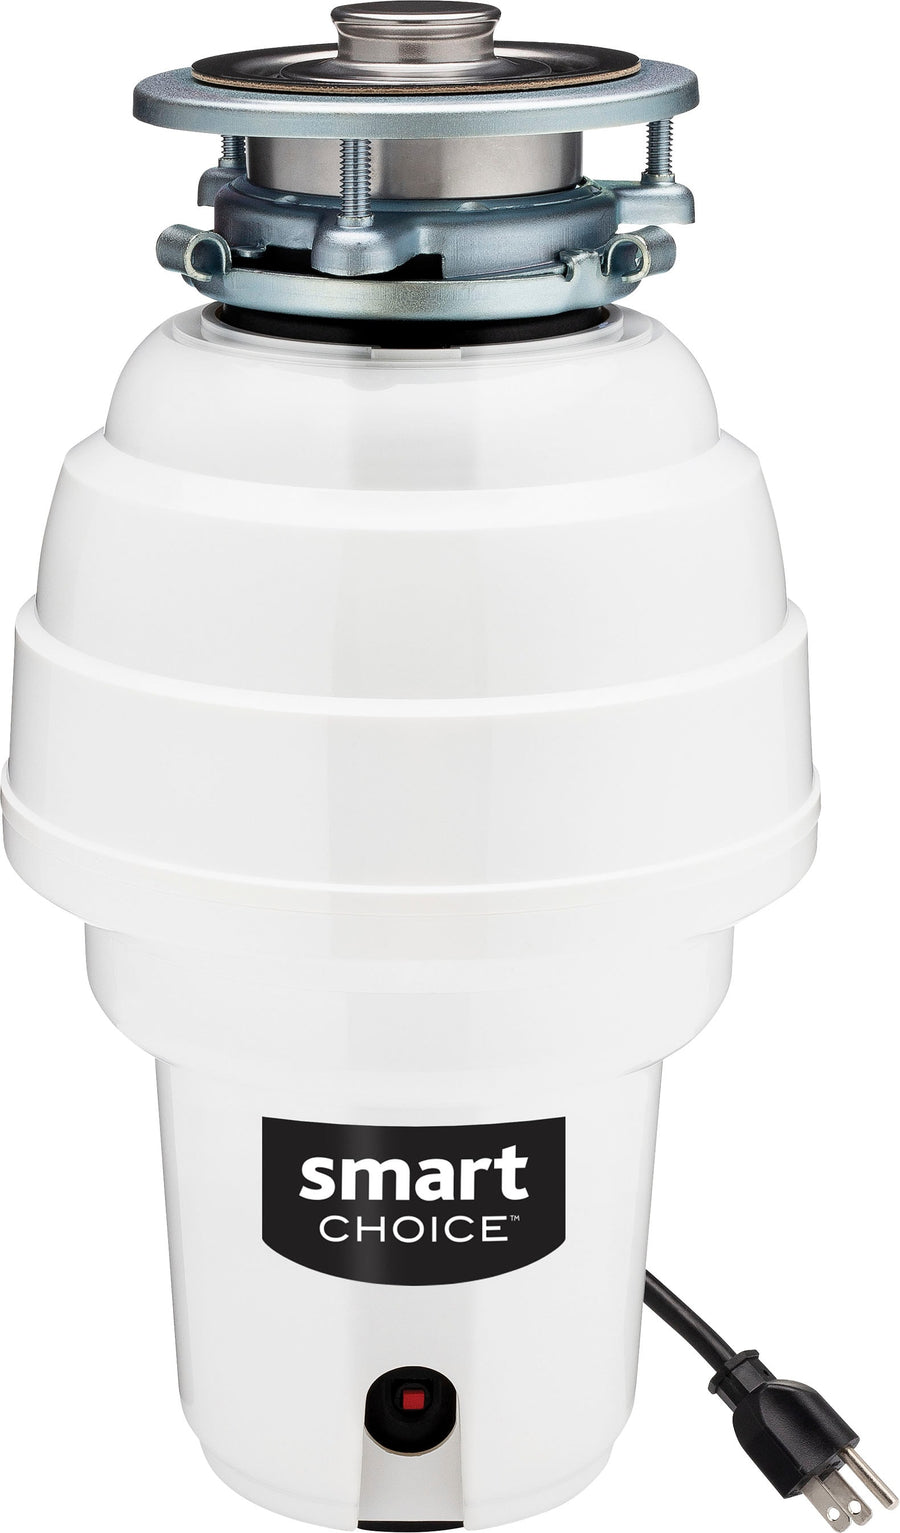 Smart Choice 1.25HP Corded Garbage Disposal - White_0